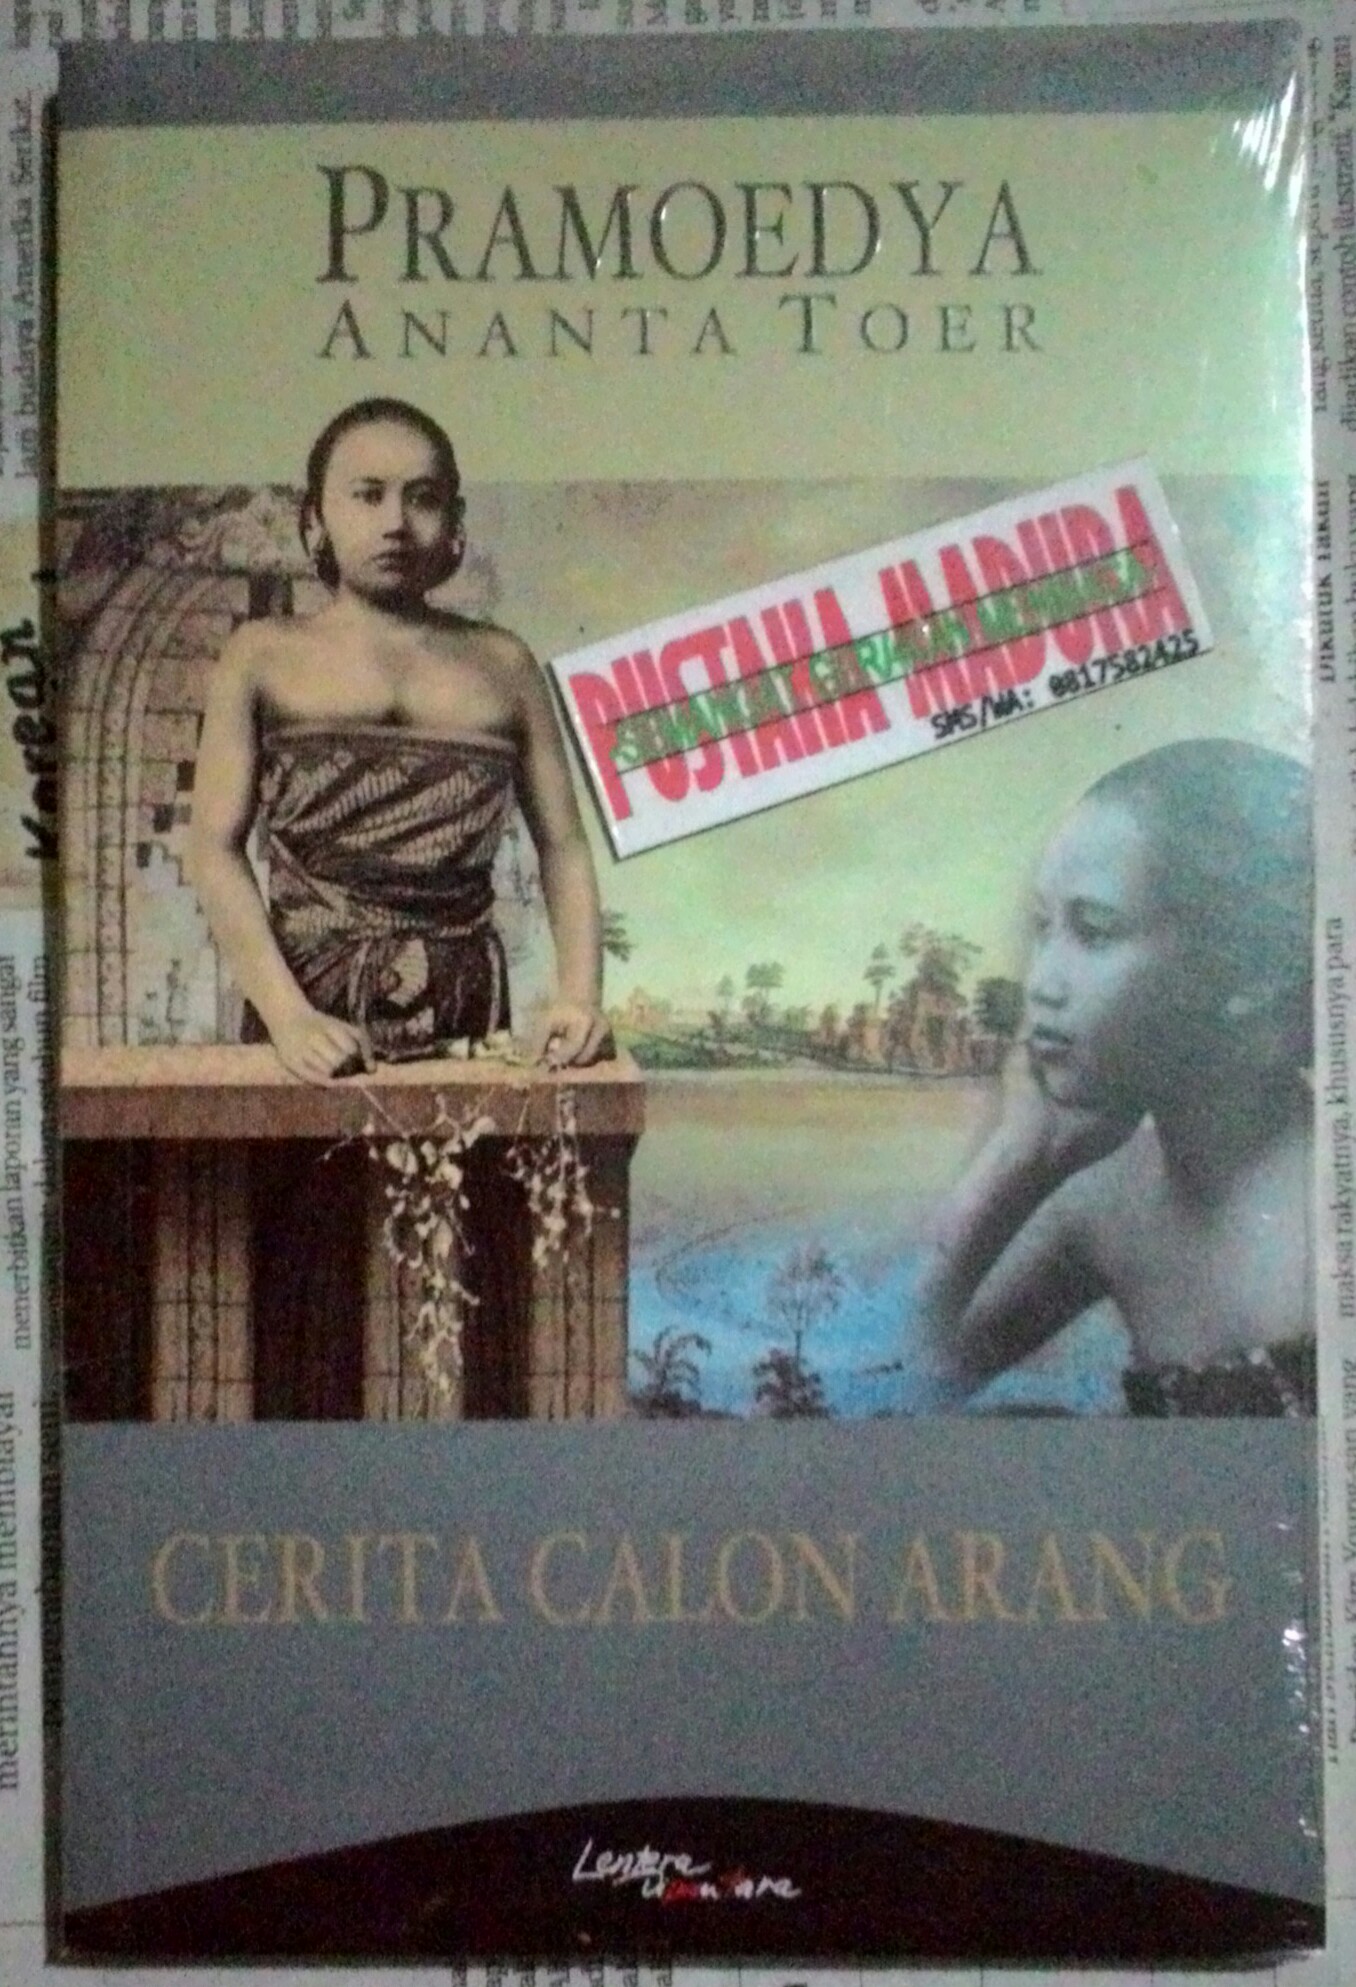 Cerita Calon Arang Pramoedya Ananta Toer – Pustaka Madura